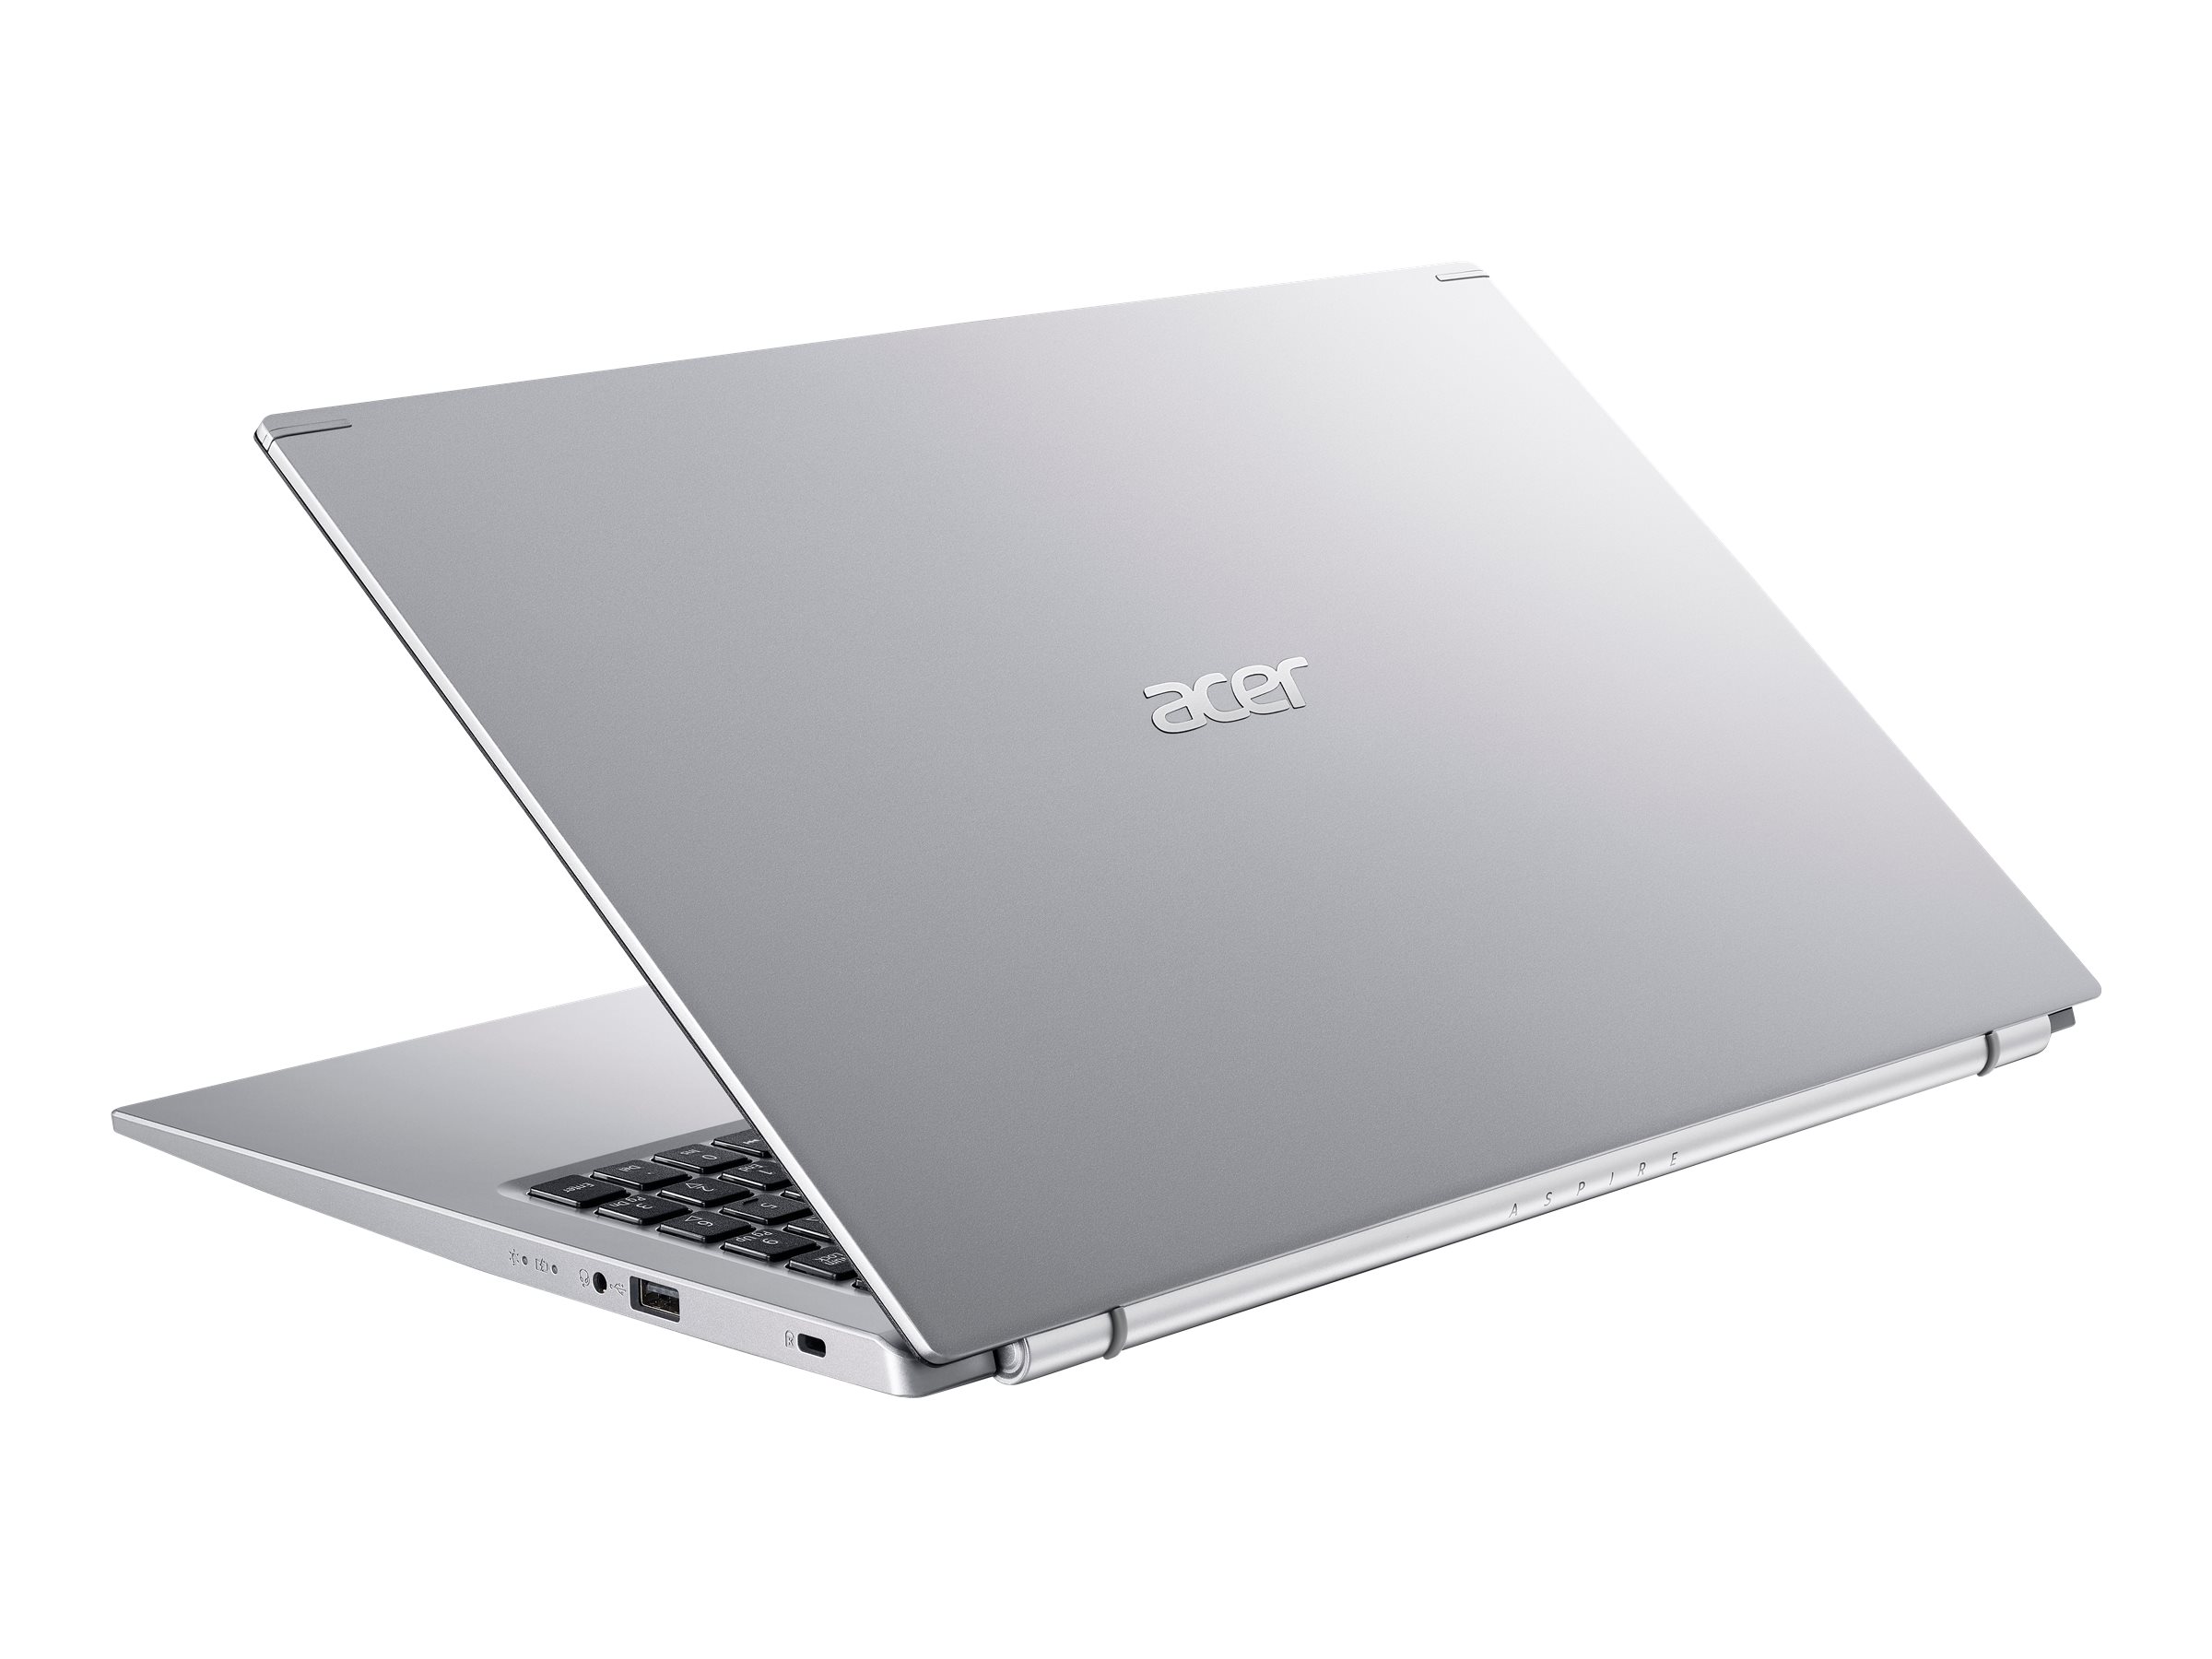 Acer Aspire 5 A515-56-36UT Slim Laptop | 15.6" Full HD Display | 11th Gen Intel Core i3-1115G4 Processor | 4GB DDR4 | 128GB NVMe SSD | WiFi 6 | Amazon Alexa | Windows 10 Home (S Mode) - image 6 of 8